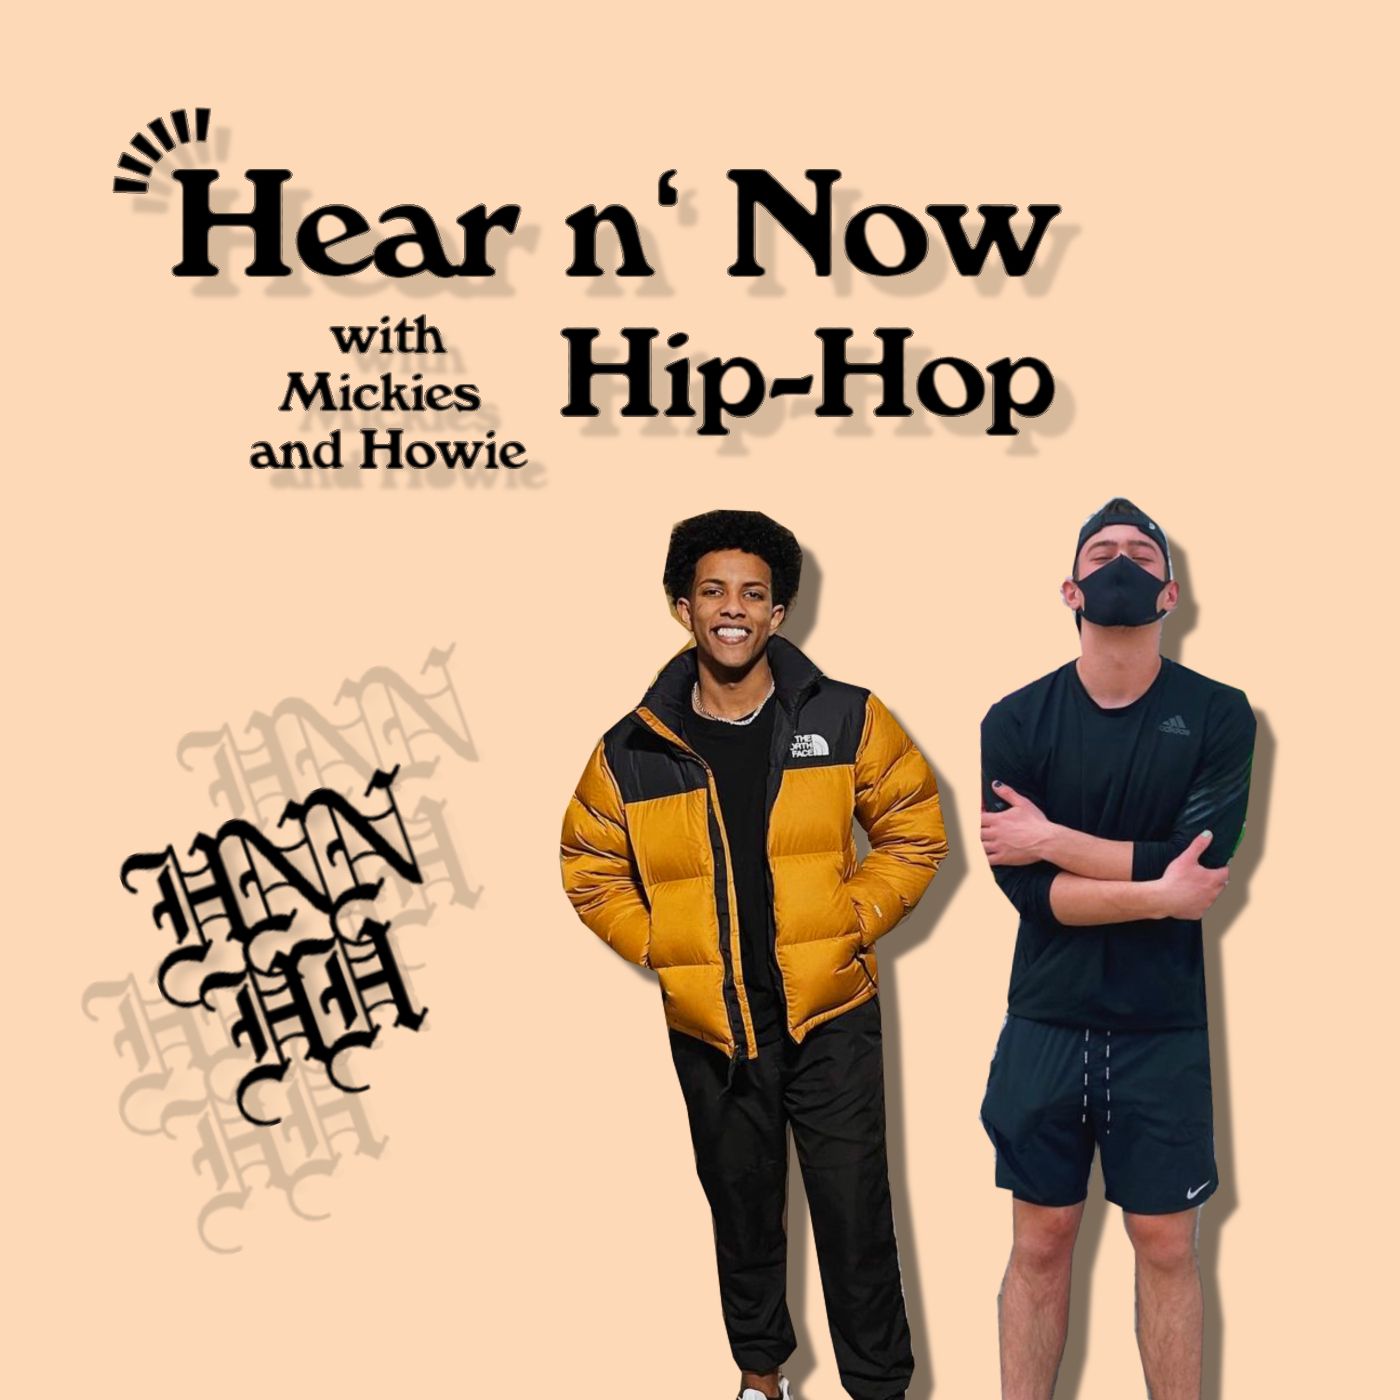 Hear n’ Now Hip-Hop